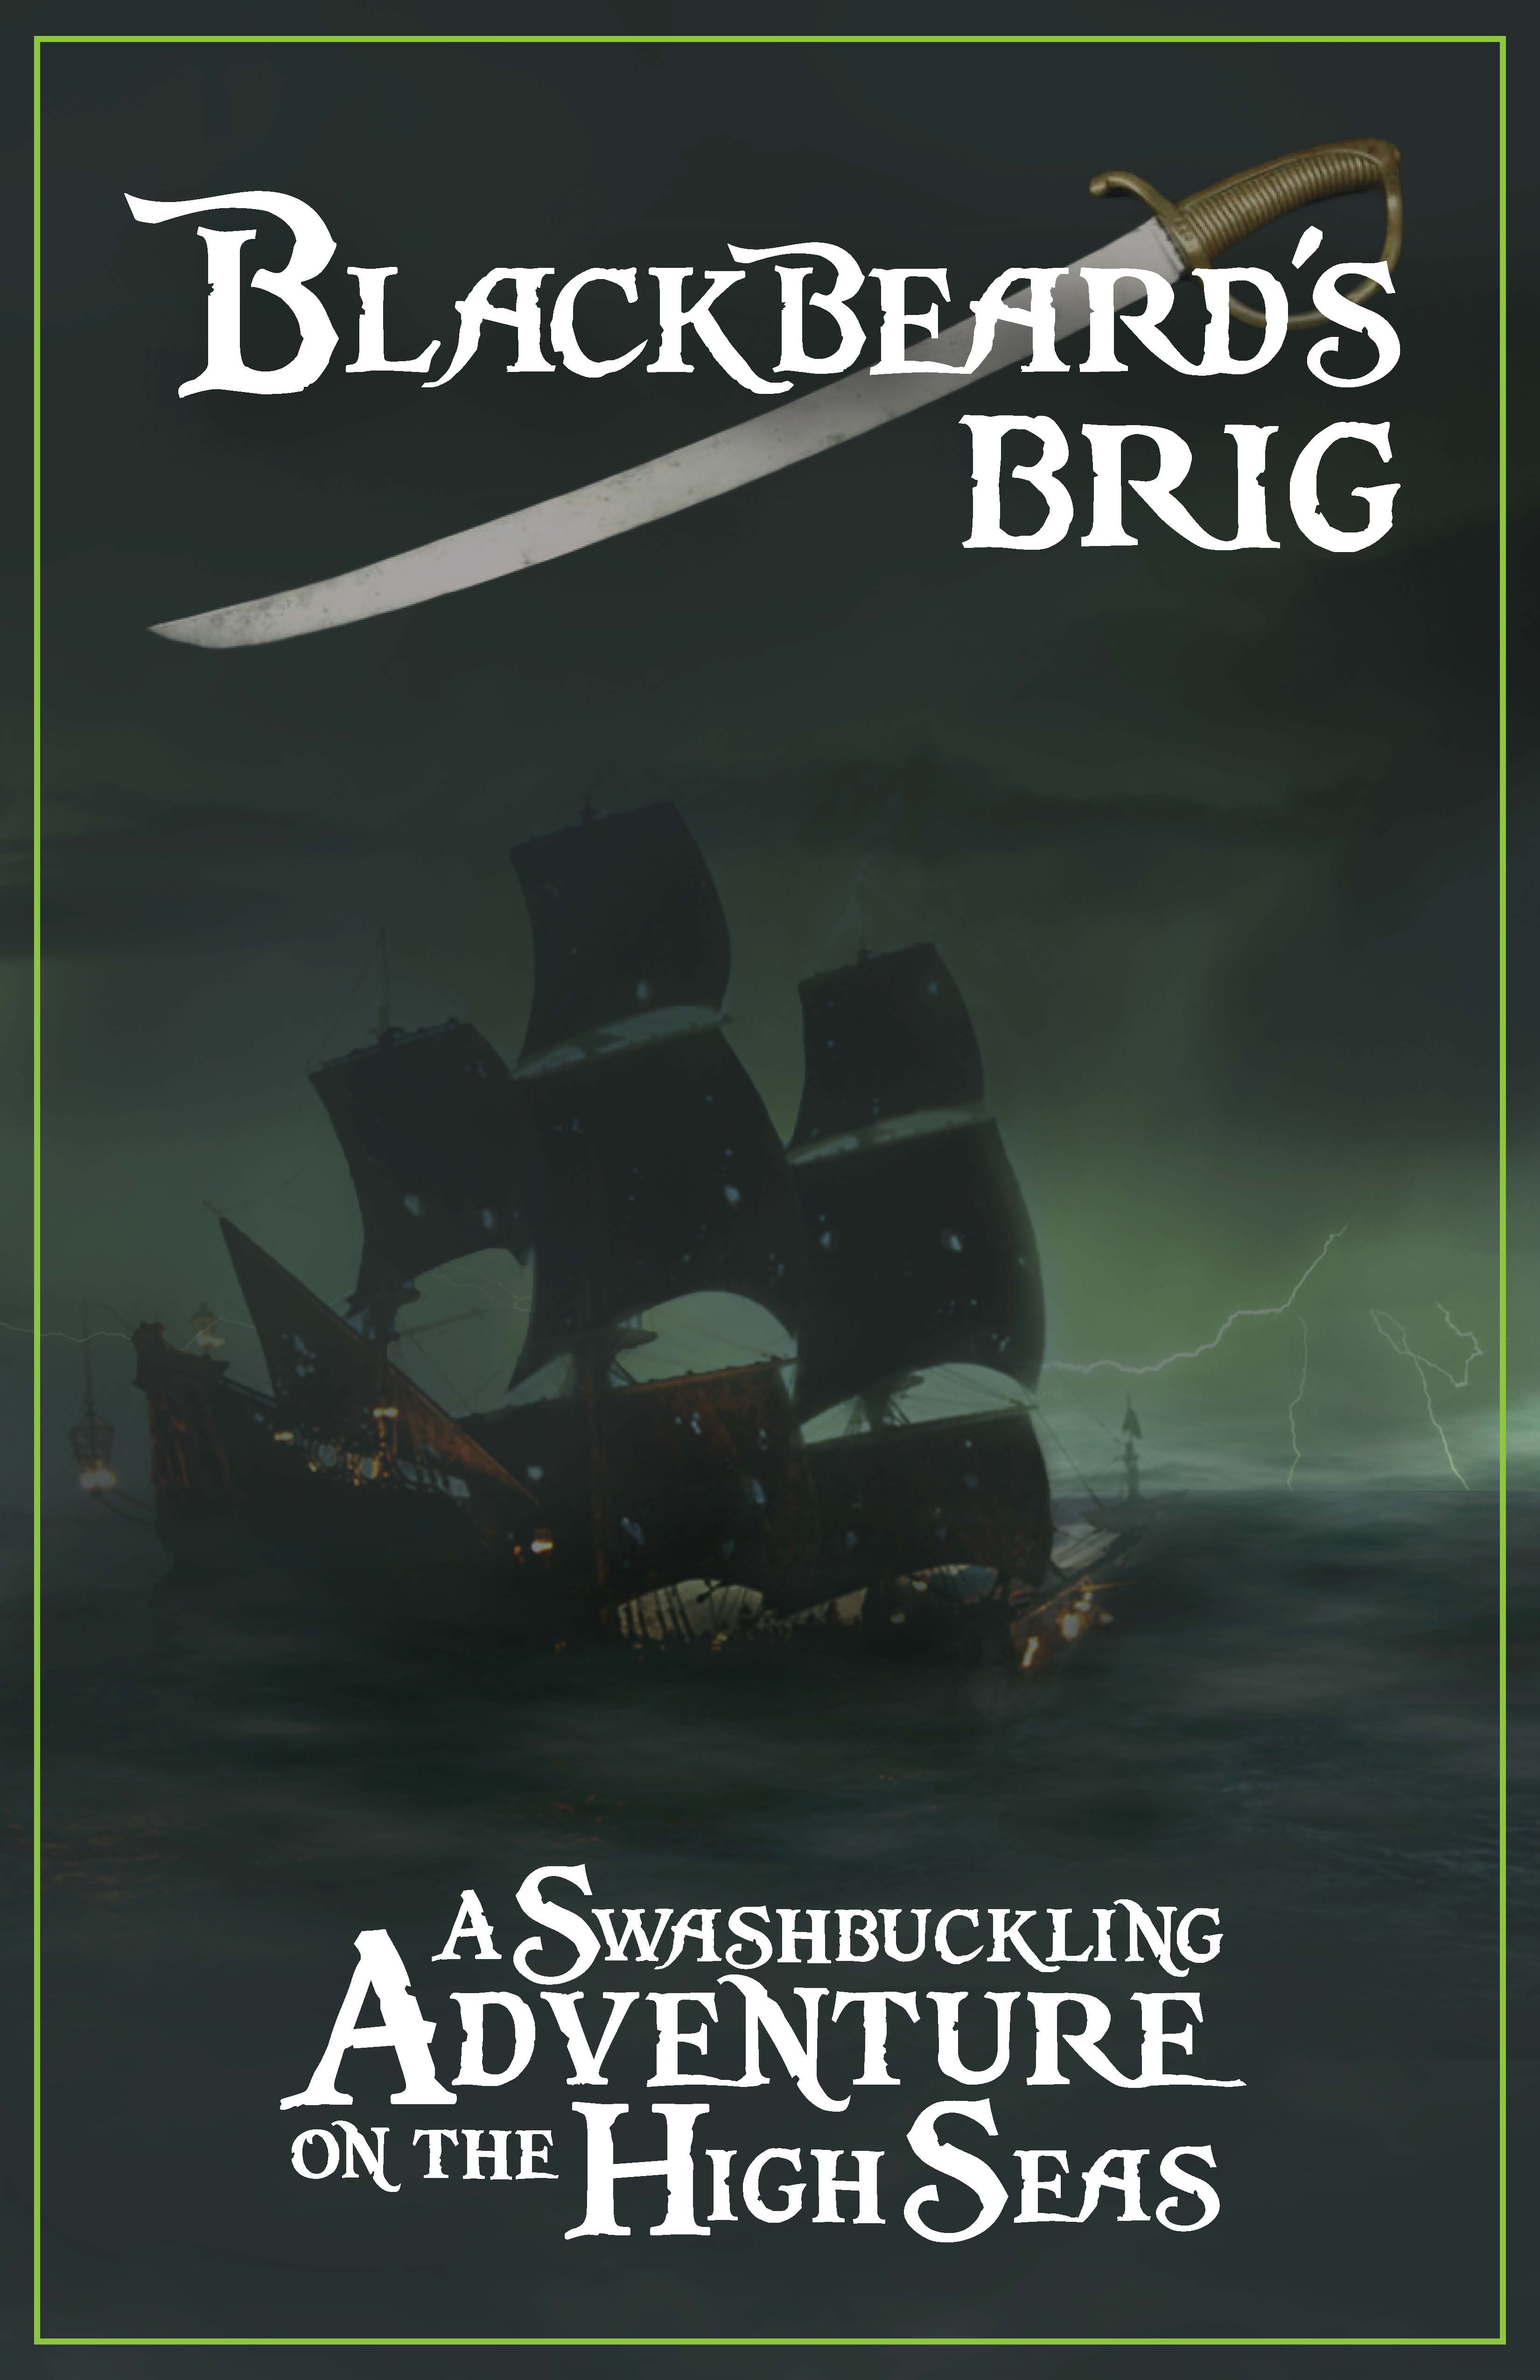 Escape from Blackbeard's Brig Original Poster